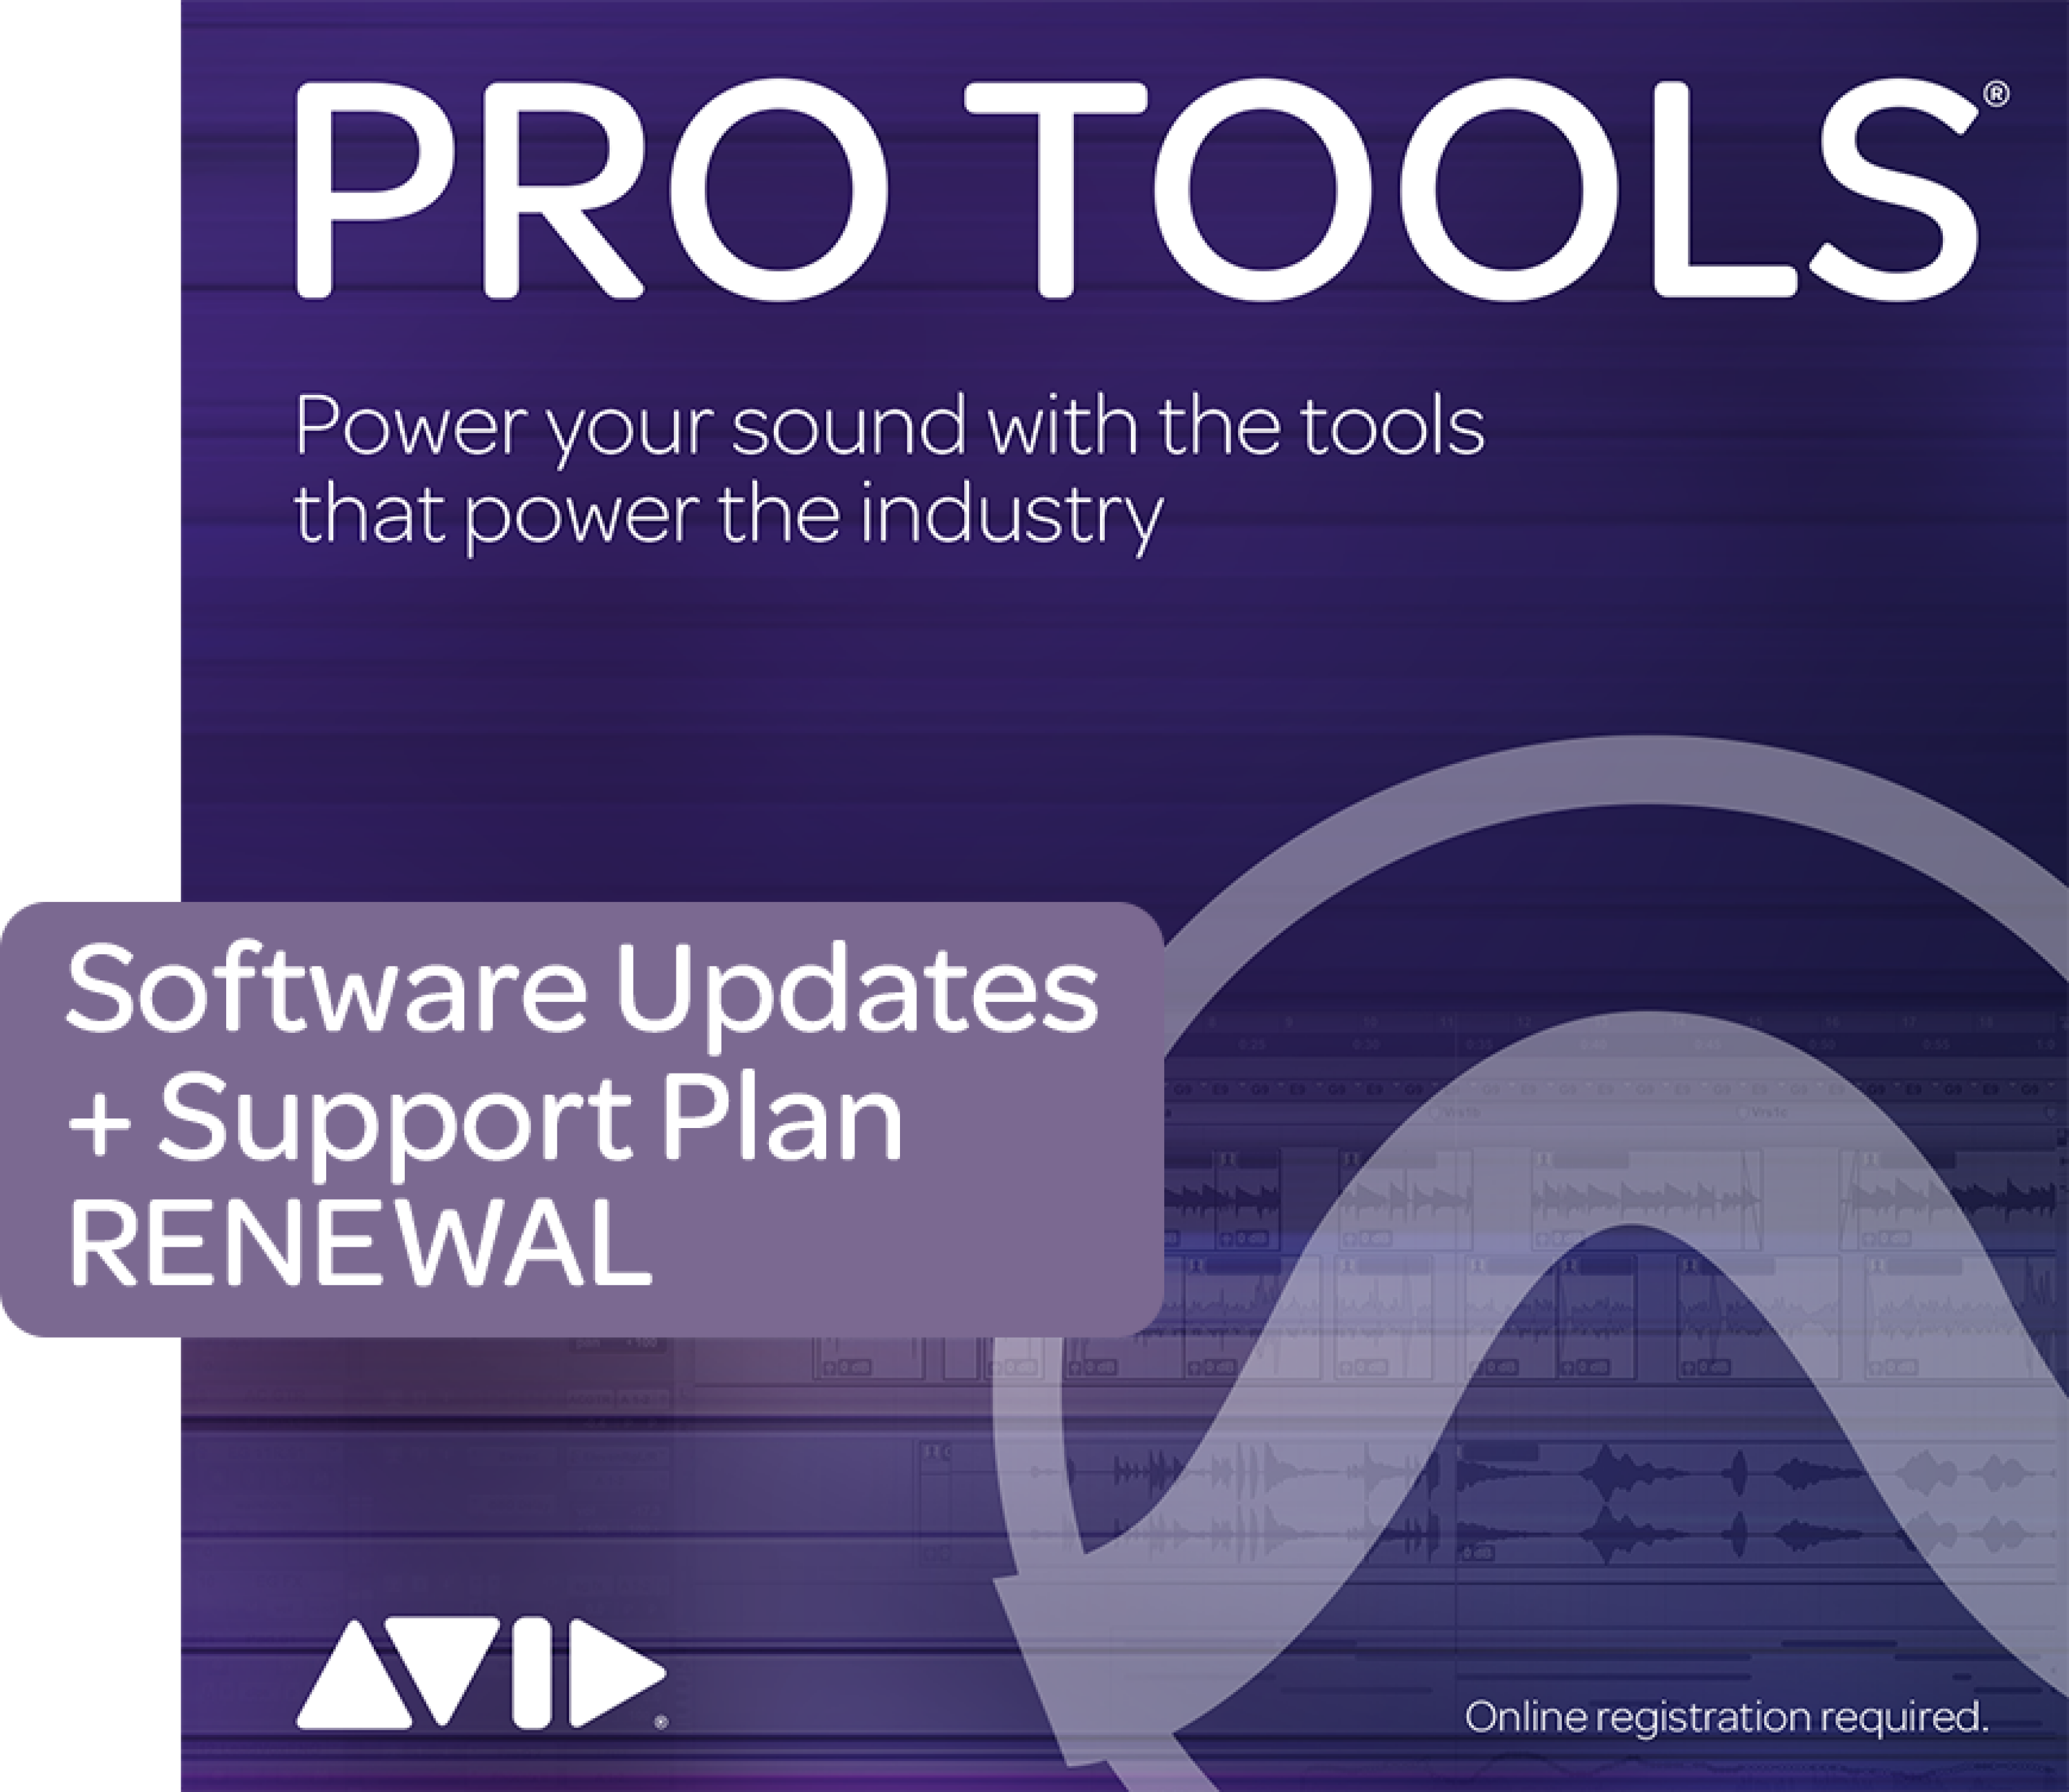 Avid Pro Tools Software Upgrades Explained